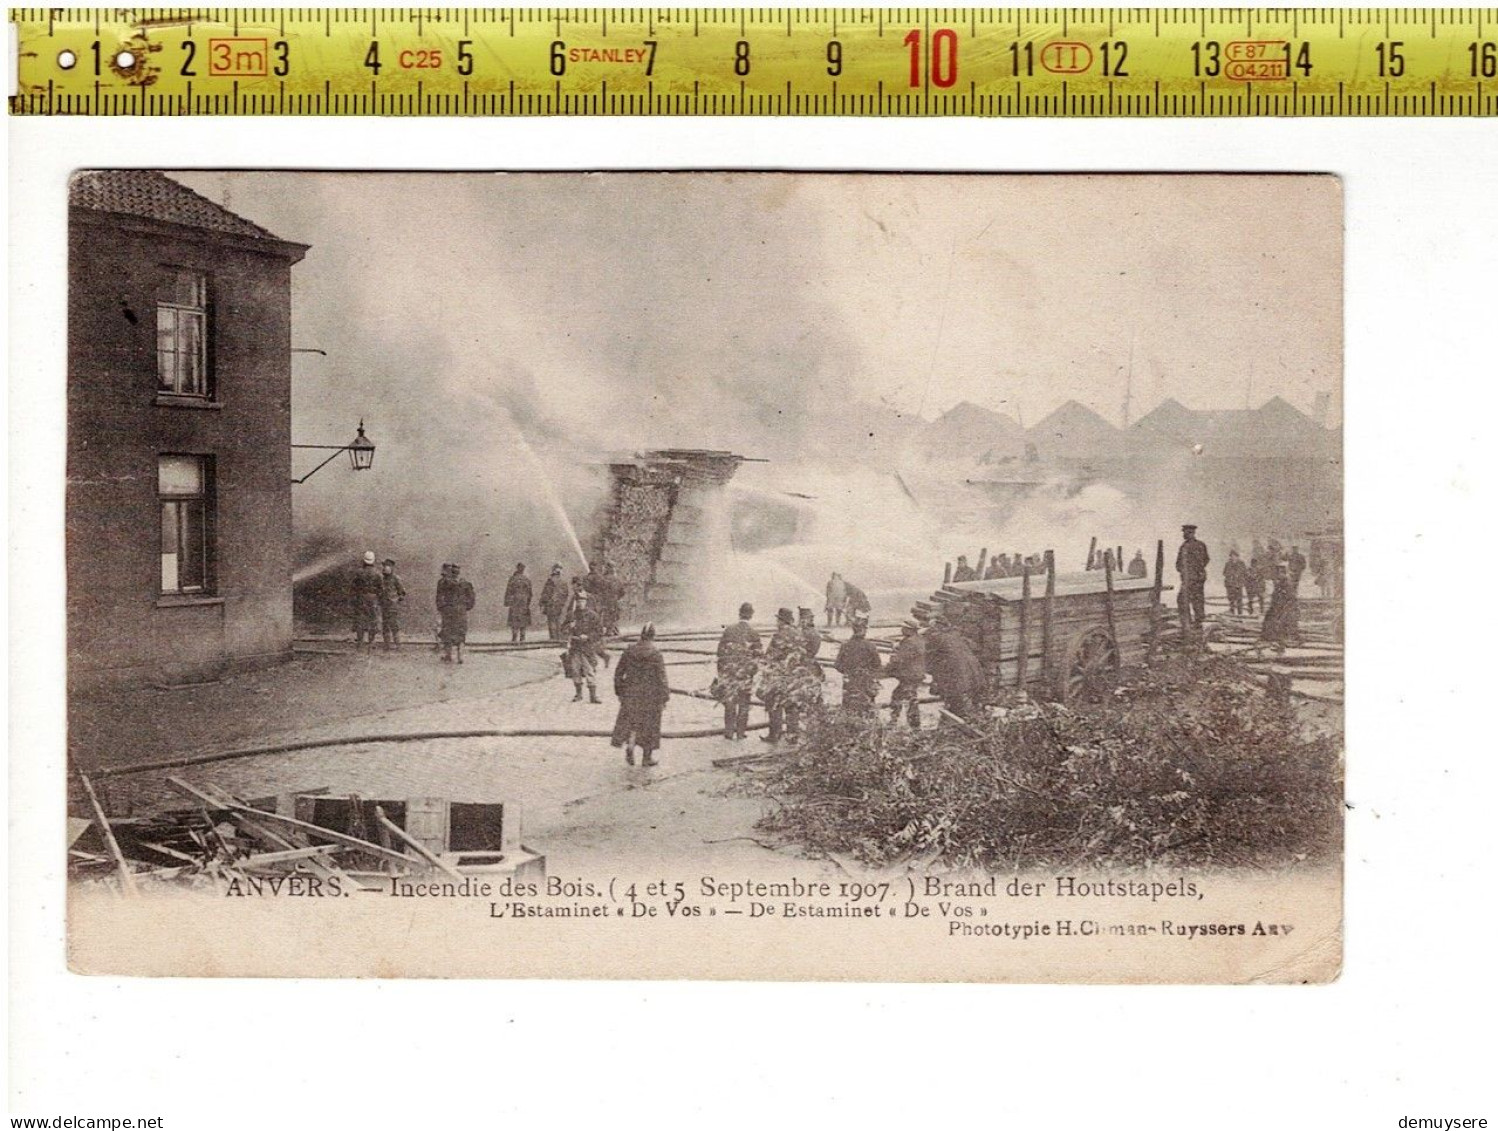 68060 - ANVERS INCENDIE DES BOIS 1907 - BRAND DER HOUTSTAPELS - Antwerpen